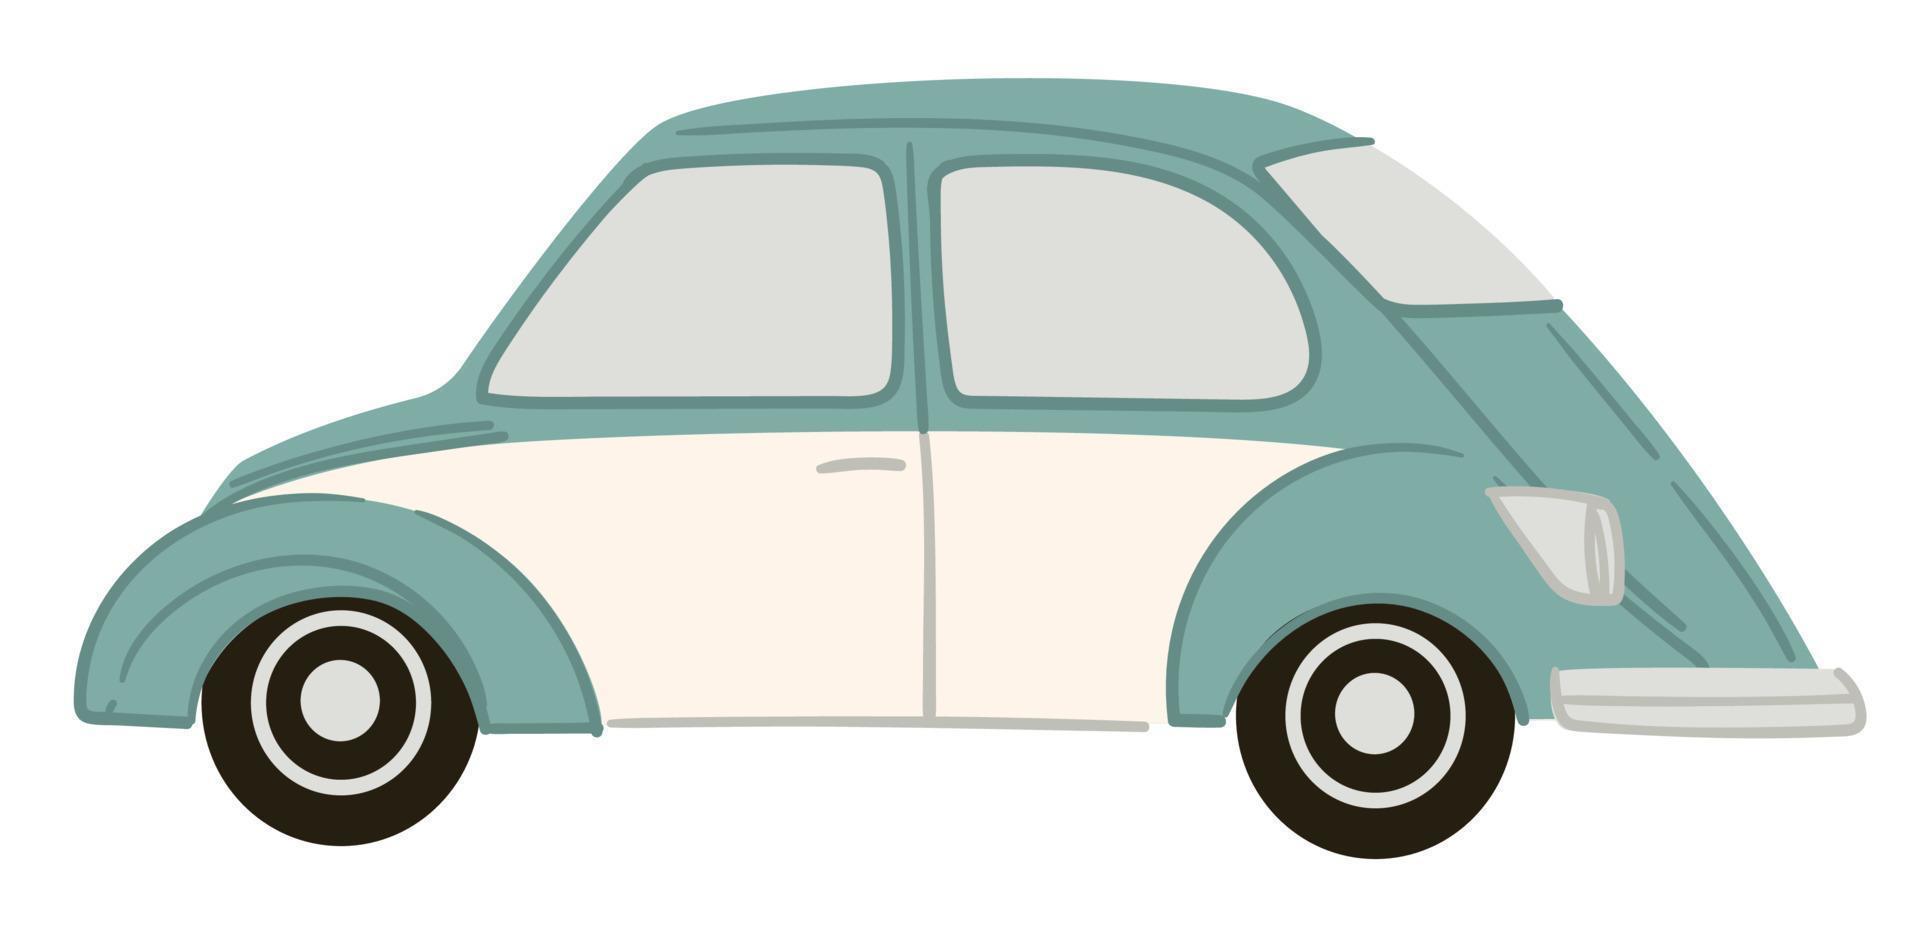 Retro mini car, vintage ecological transportation vector